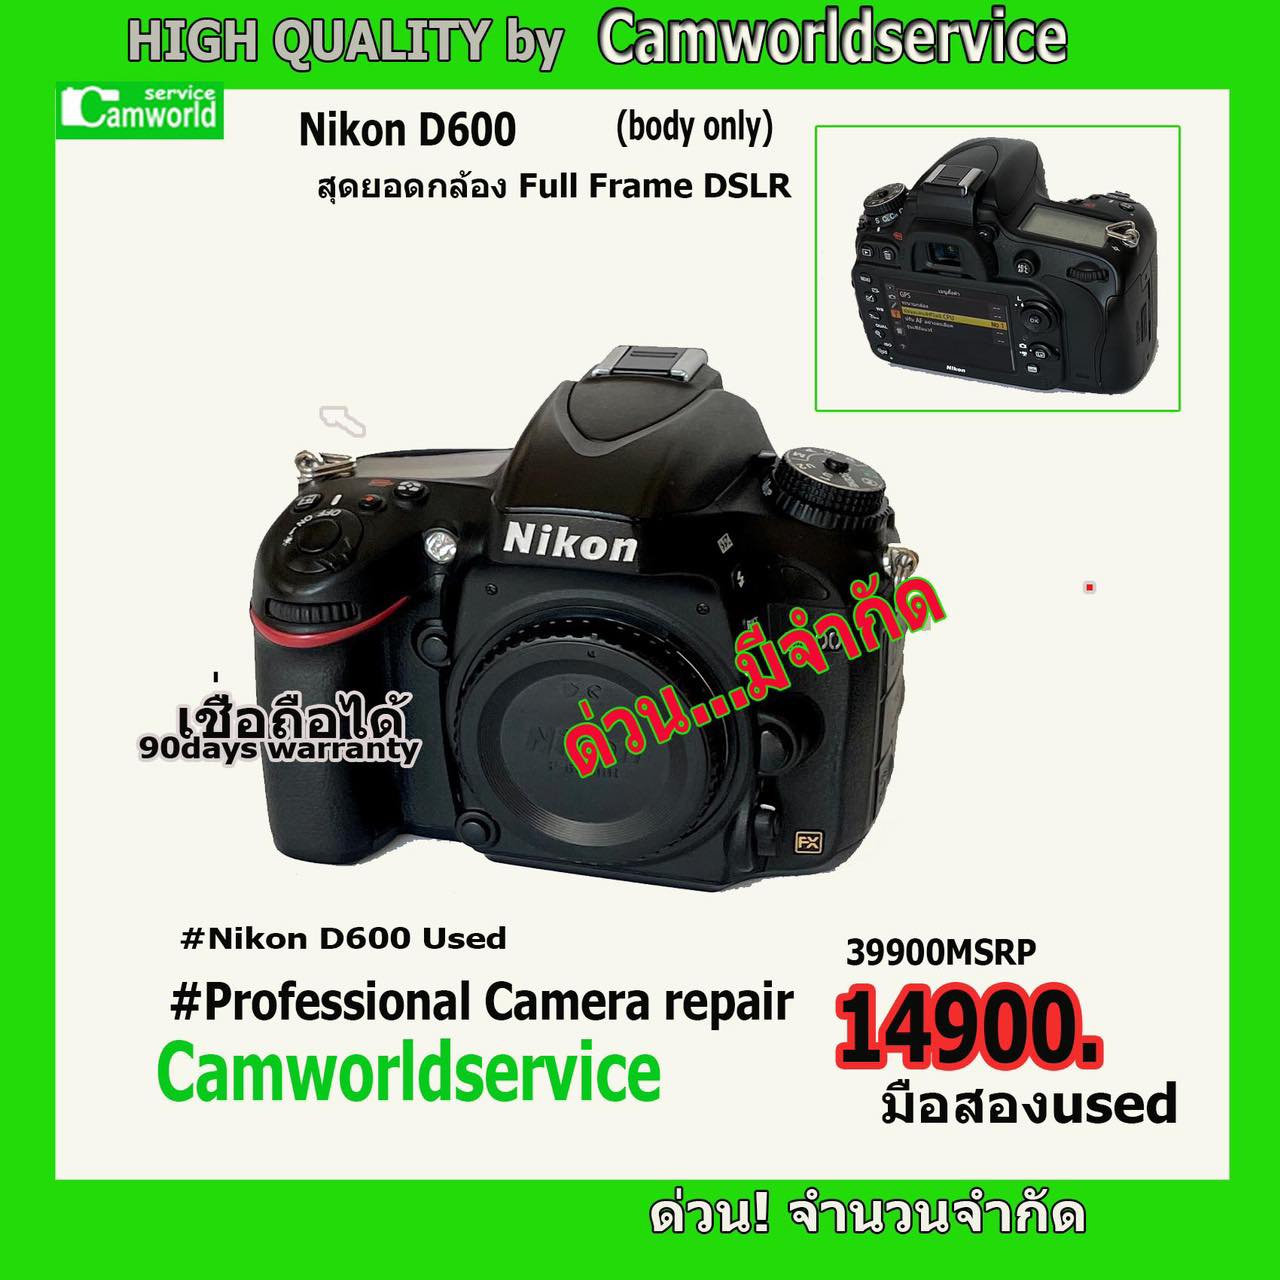 Nikon D600 Body (Full frame) - มือสอง สภาพดี เชื่อถือได้ มีรับประกันคุณภาพ 90 วัน